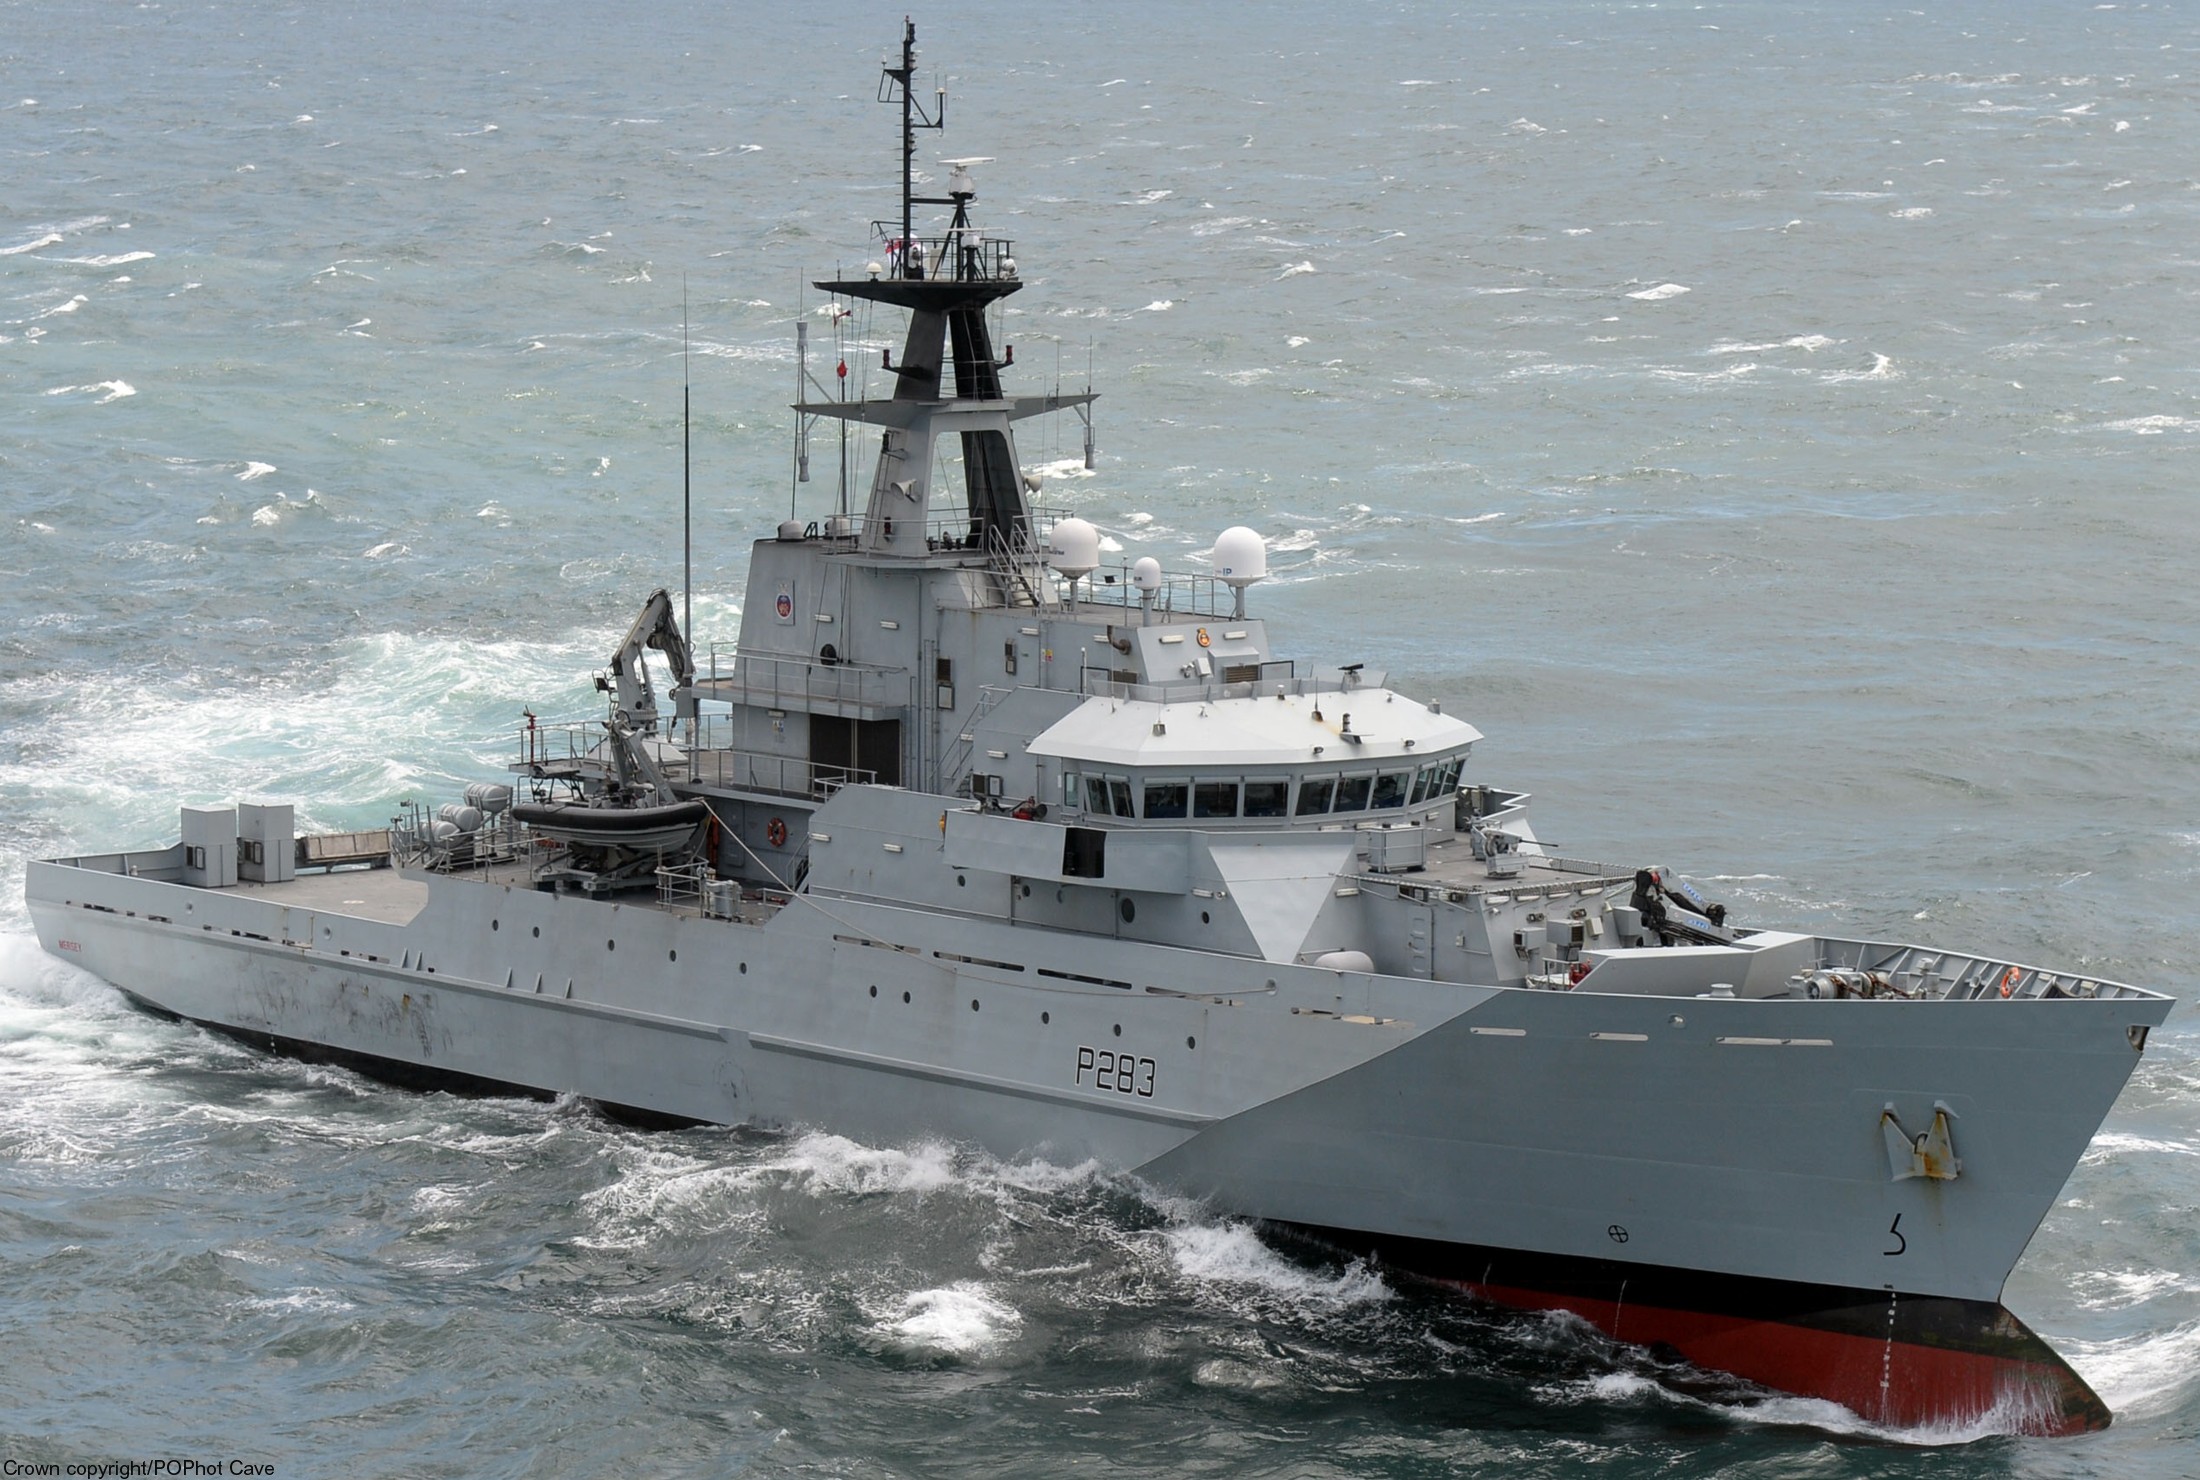 p-283 hms mersey river class offshore patrol vessel opv royal navy 08